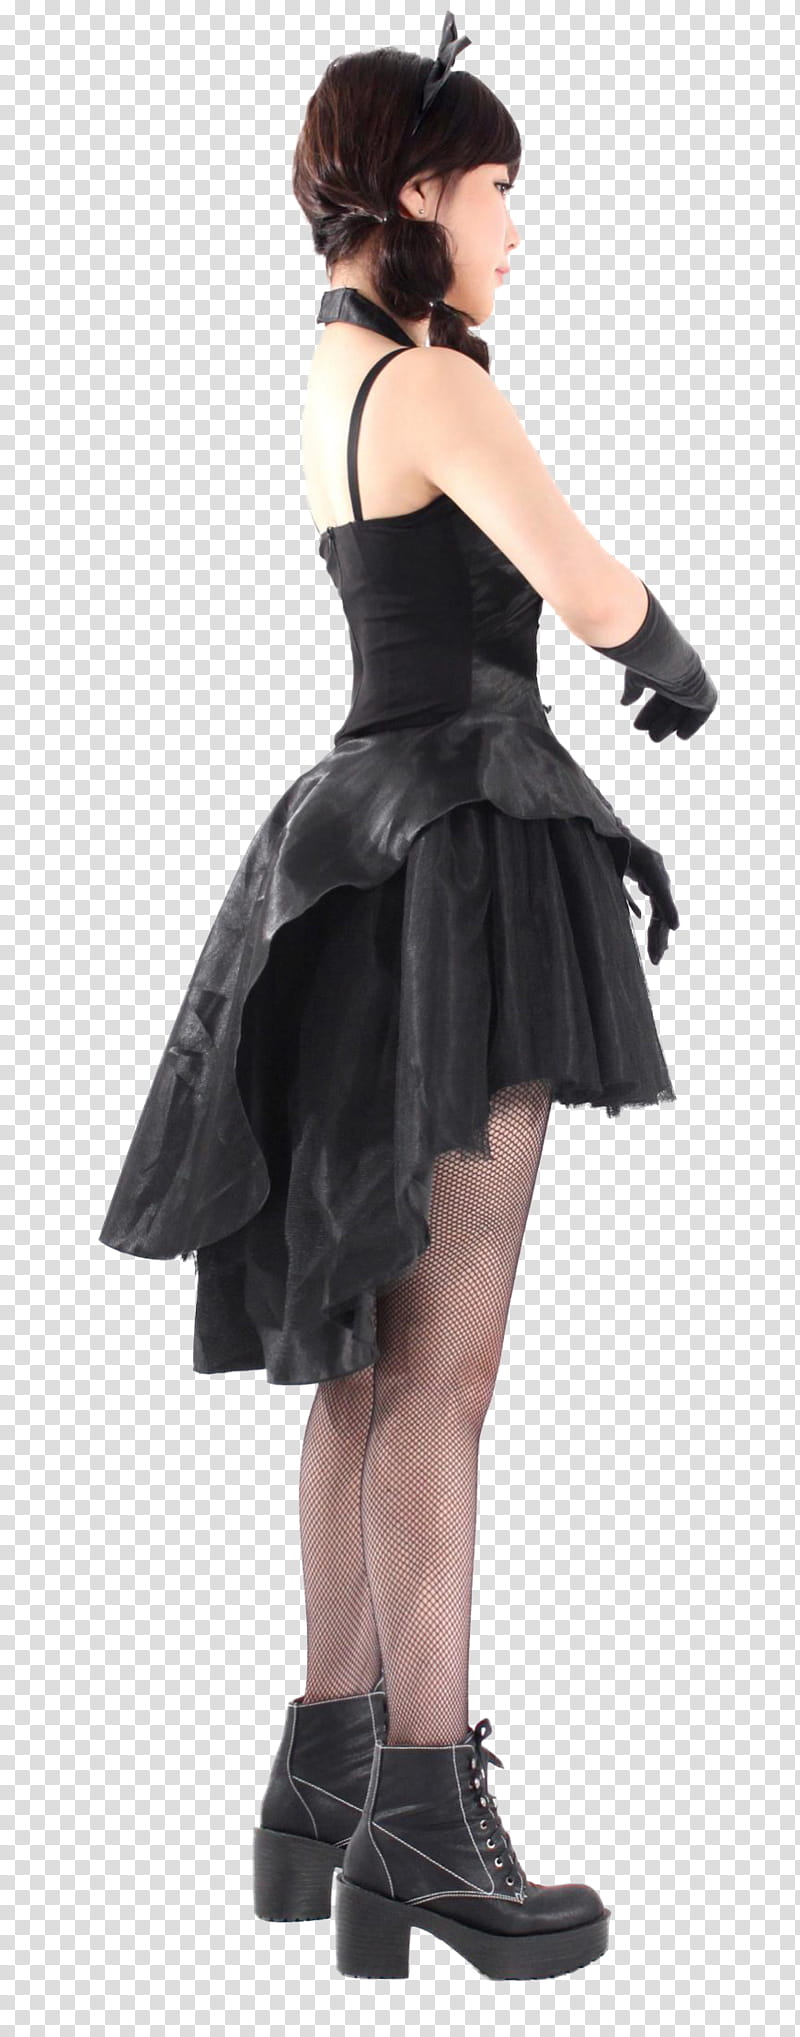 T ara, woman wearing black halter dress transparent background PNG clipart